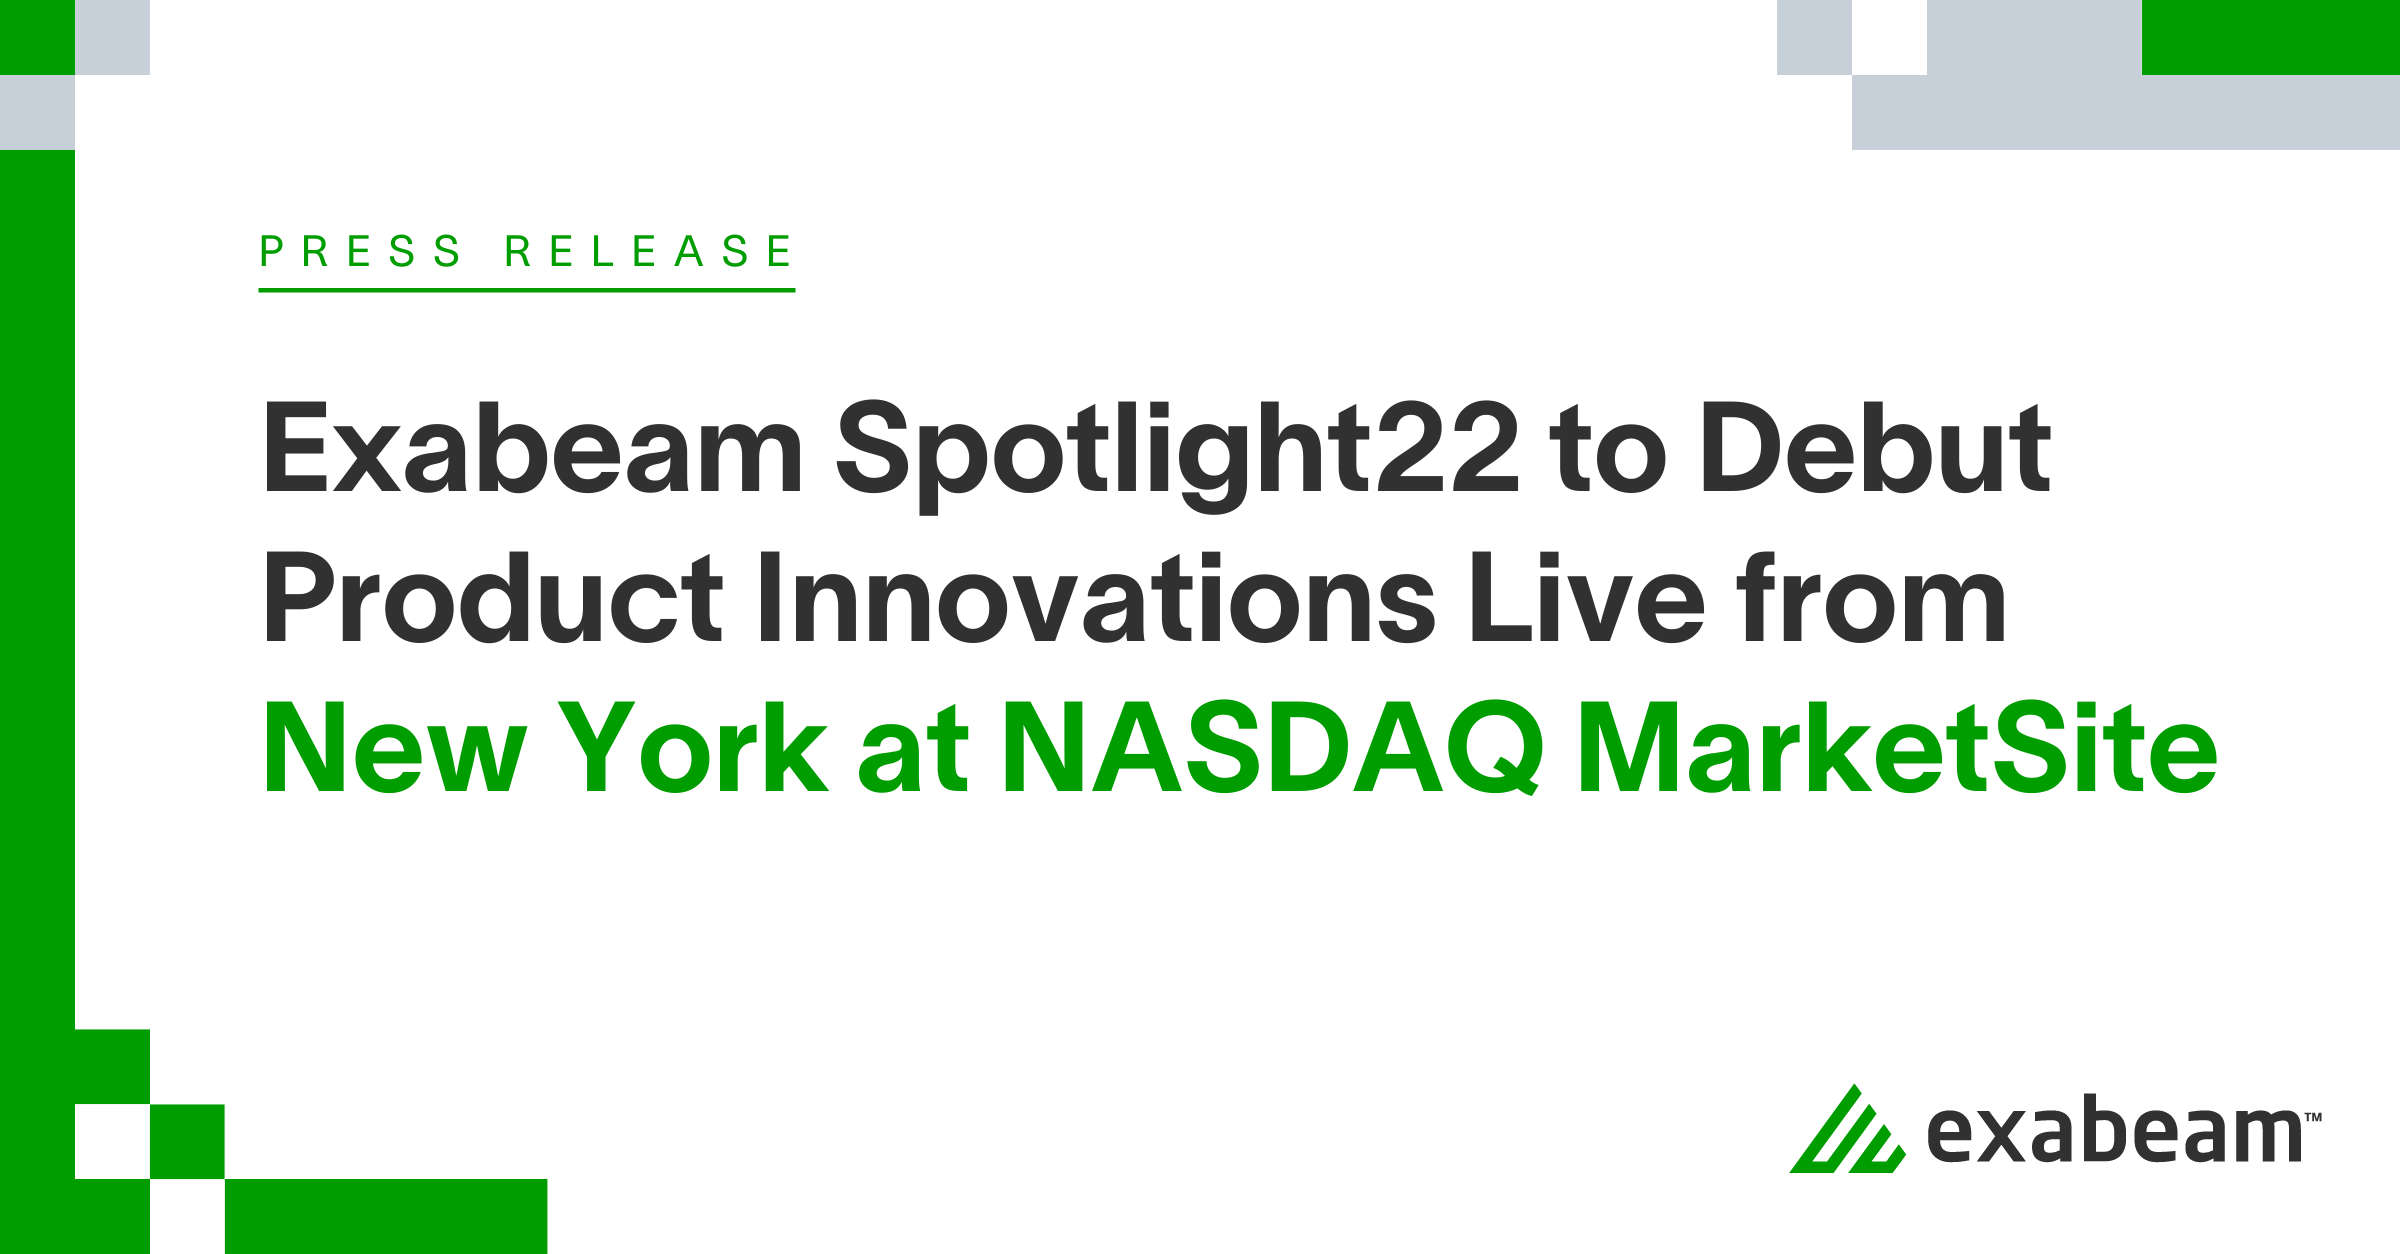 Exabeam Spotlight22 to Debut Product Innovations Live from New York at NASDAQ MarketSite